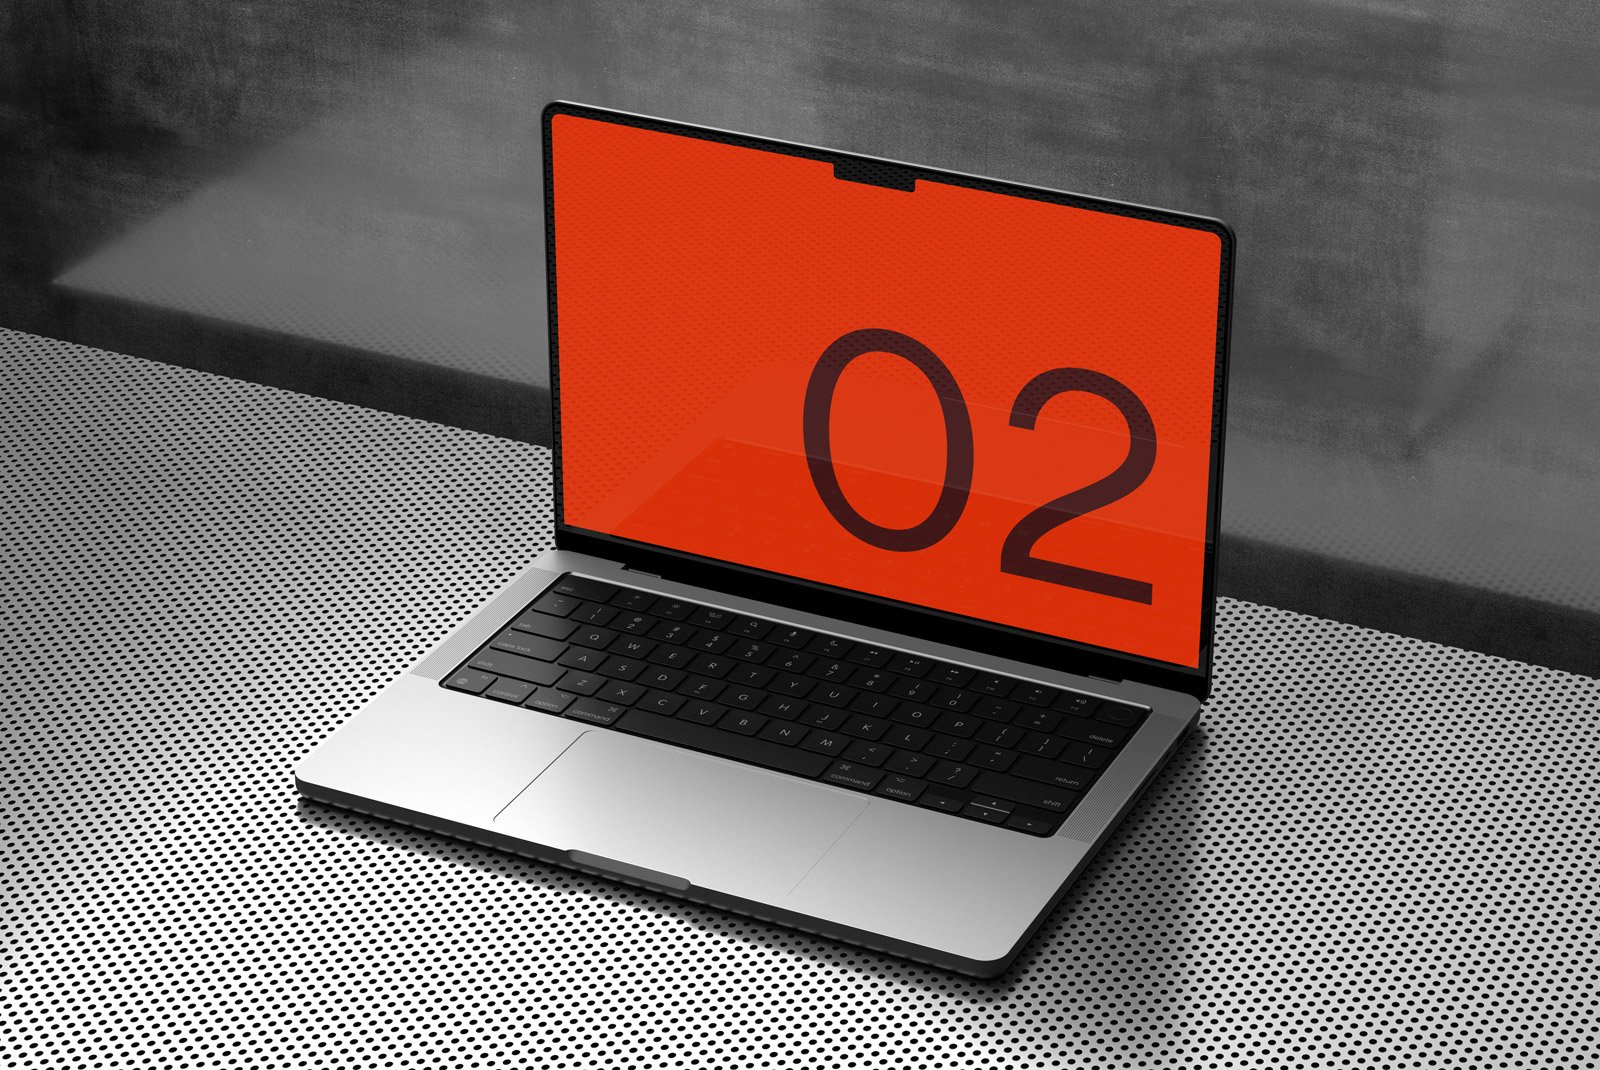 MacBook Pro 02 Standard Mockup preview image.